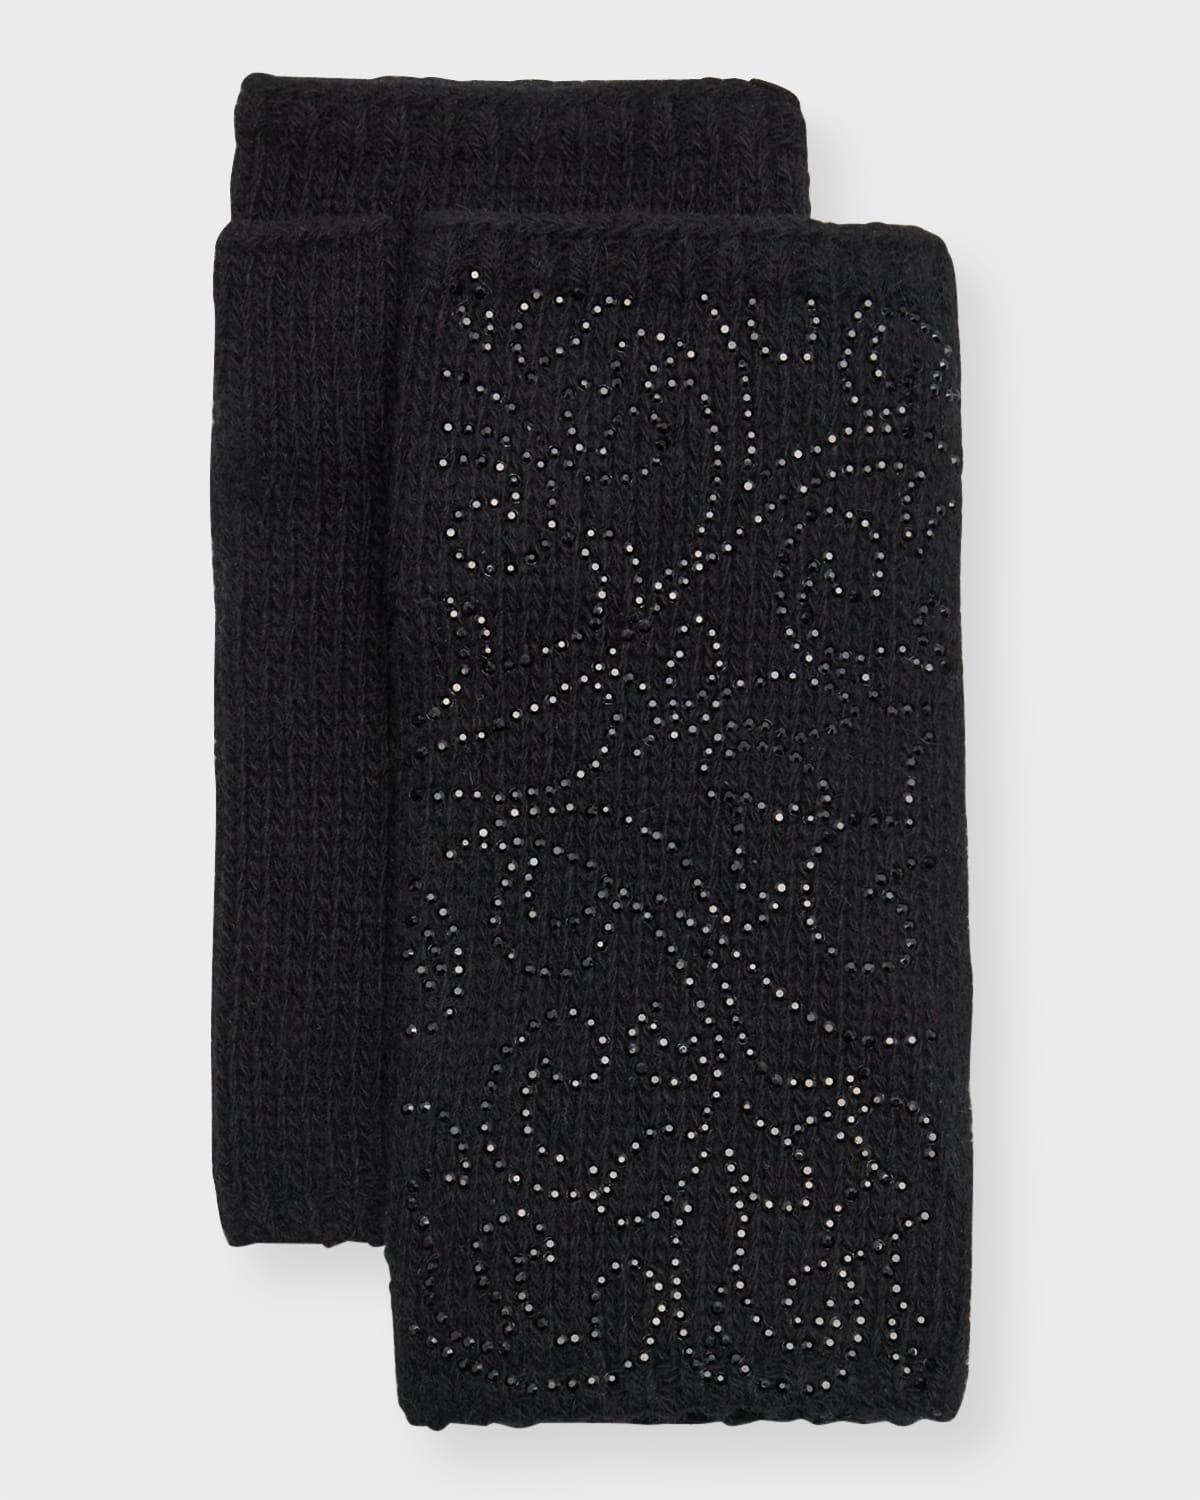 Carolyn Rowan Embellished Fleur De Lis Cashmere Fingerless Gloves In Black Black